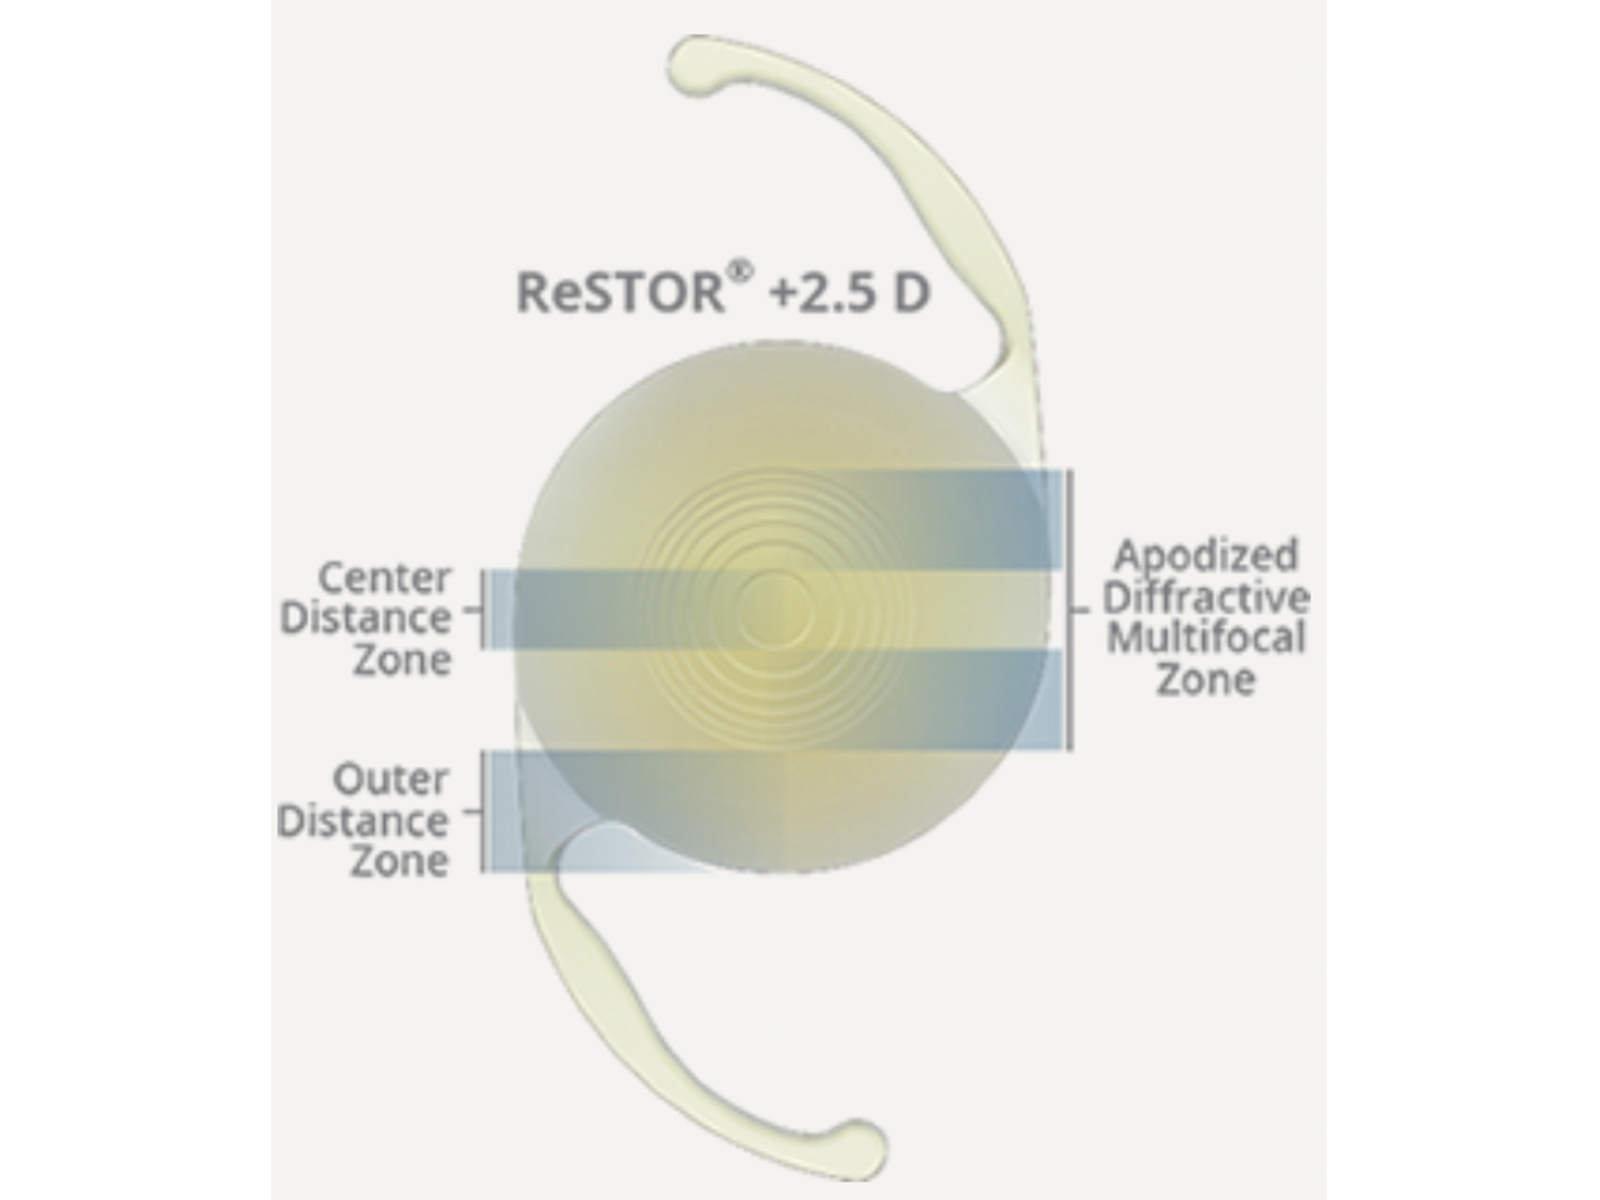 Alcon restor multifocal lens cvs caremark extracare health card replacement